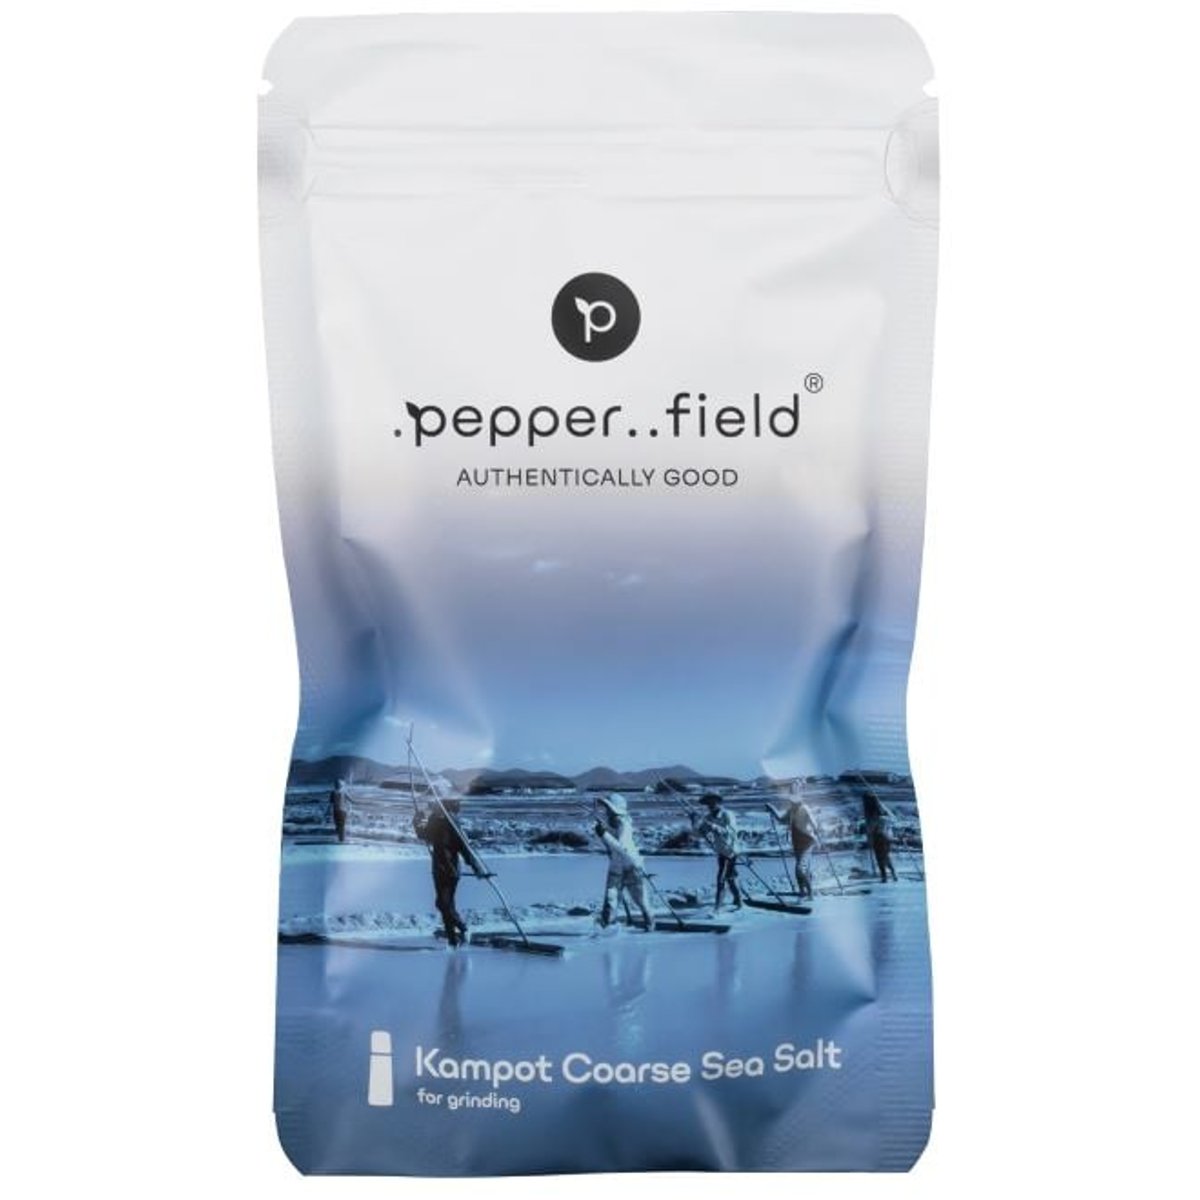 .pepper..field Hrubozrnná mořská sůl z Kampotu do mlýnku